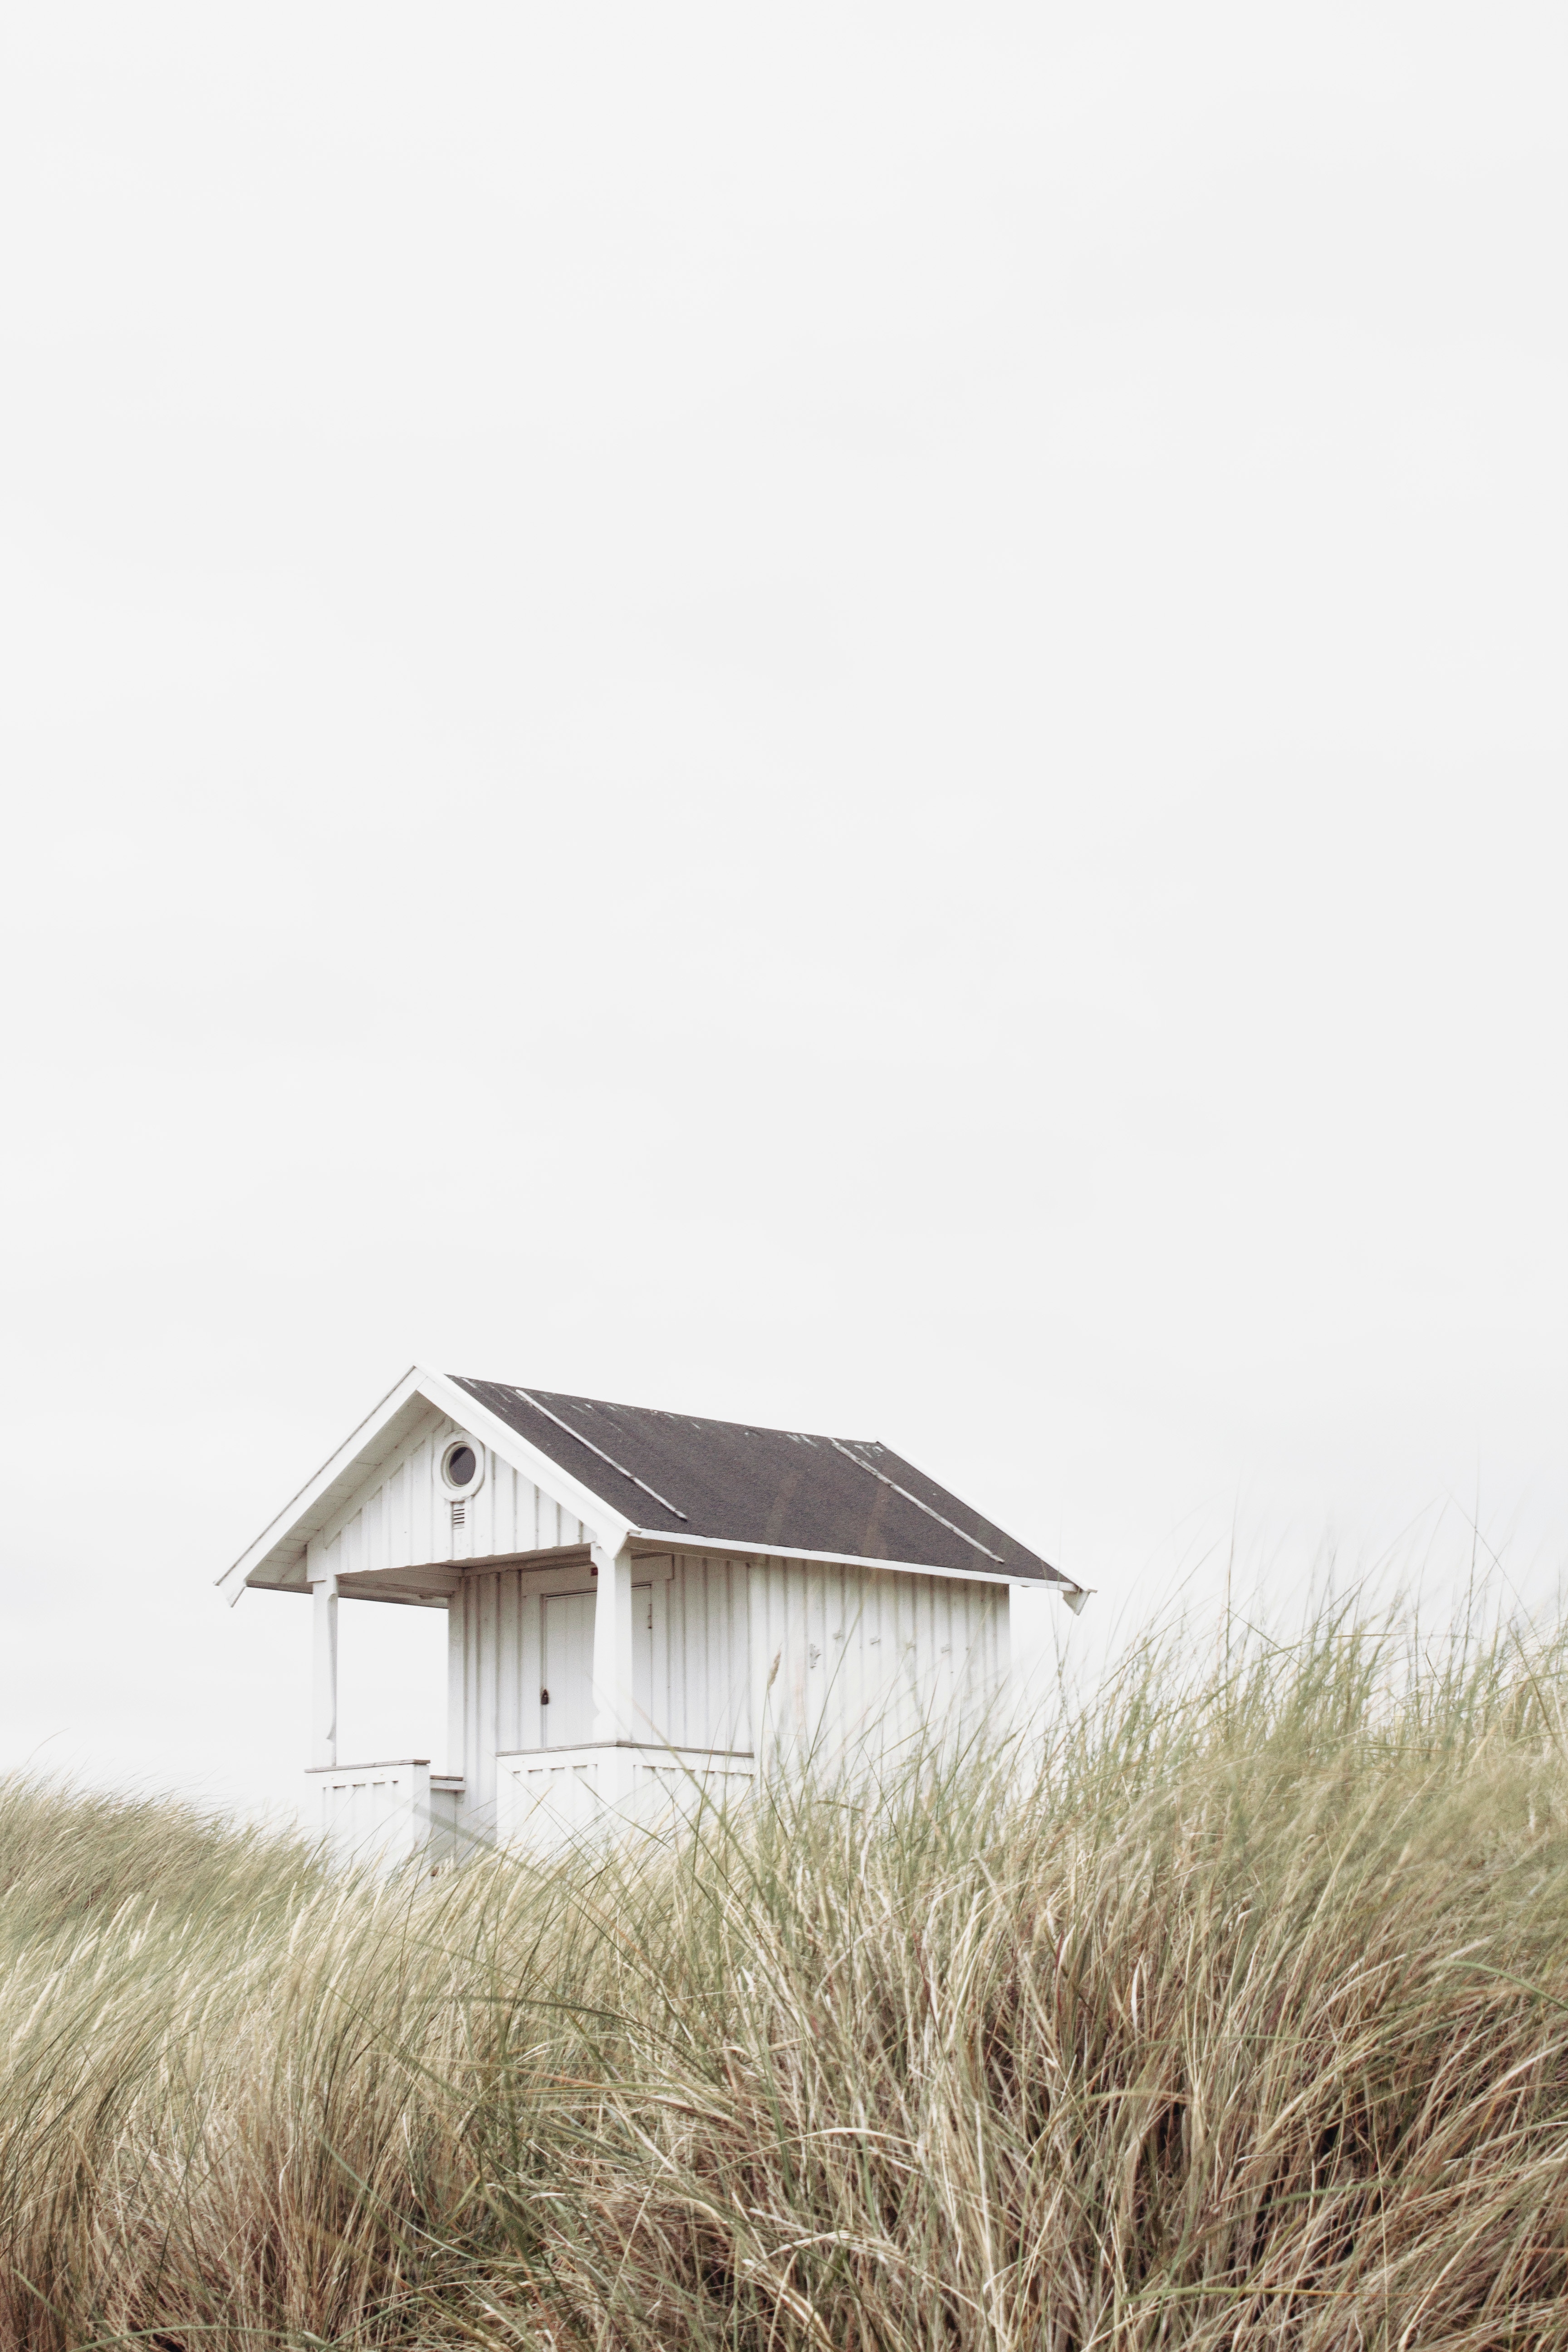 minimalism, alone, lodge, grass, small house, lonely, harmony